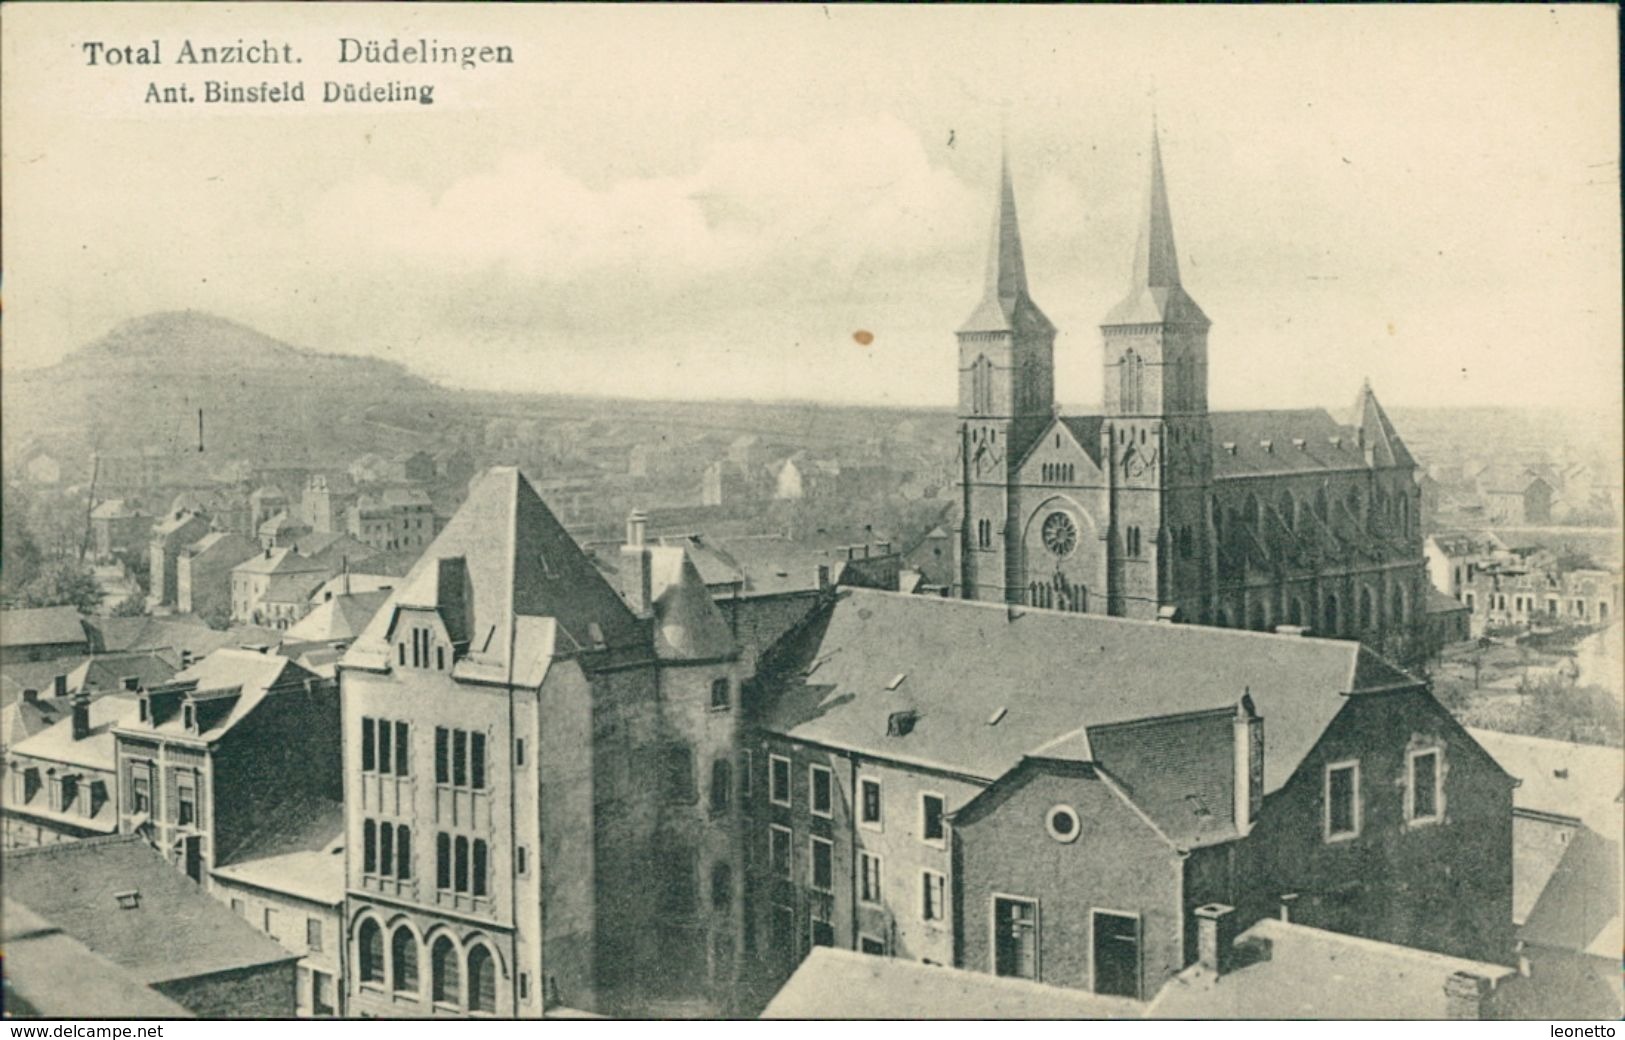 AK Düdelingen, Total Anzicht. Ant. Binsfeld Düdeling, Um 1910 (29908) - Dudelange